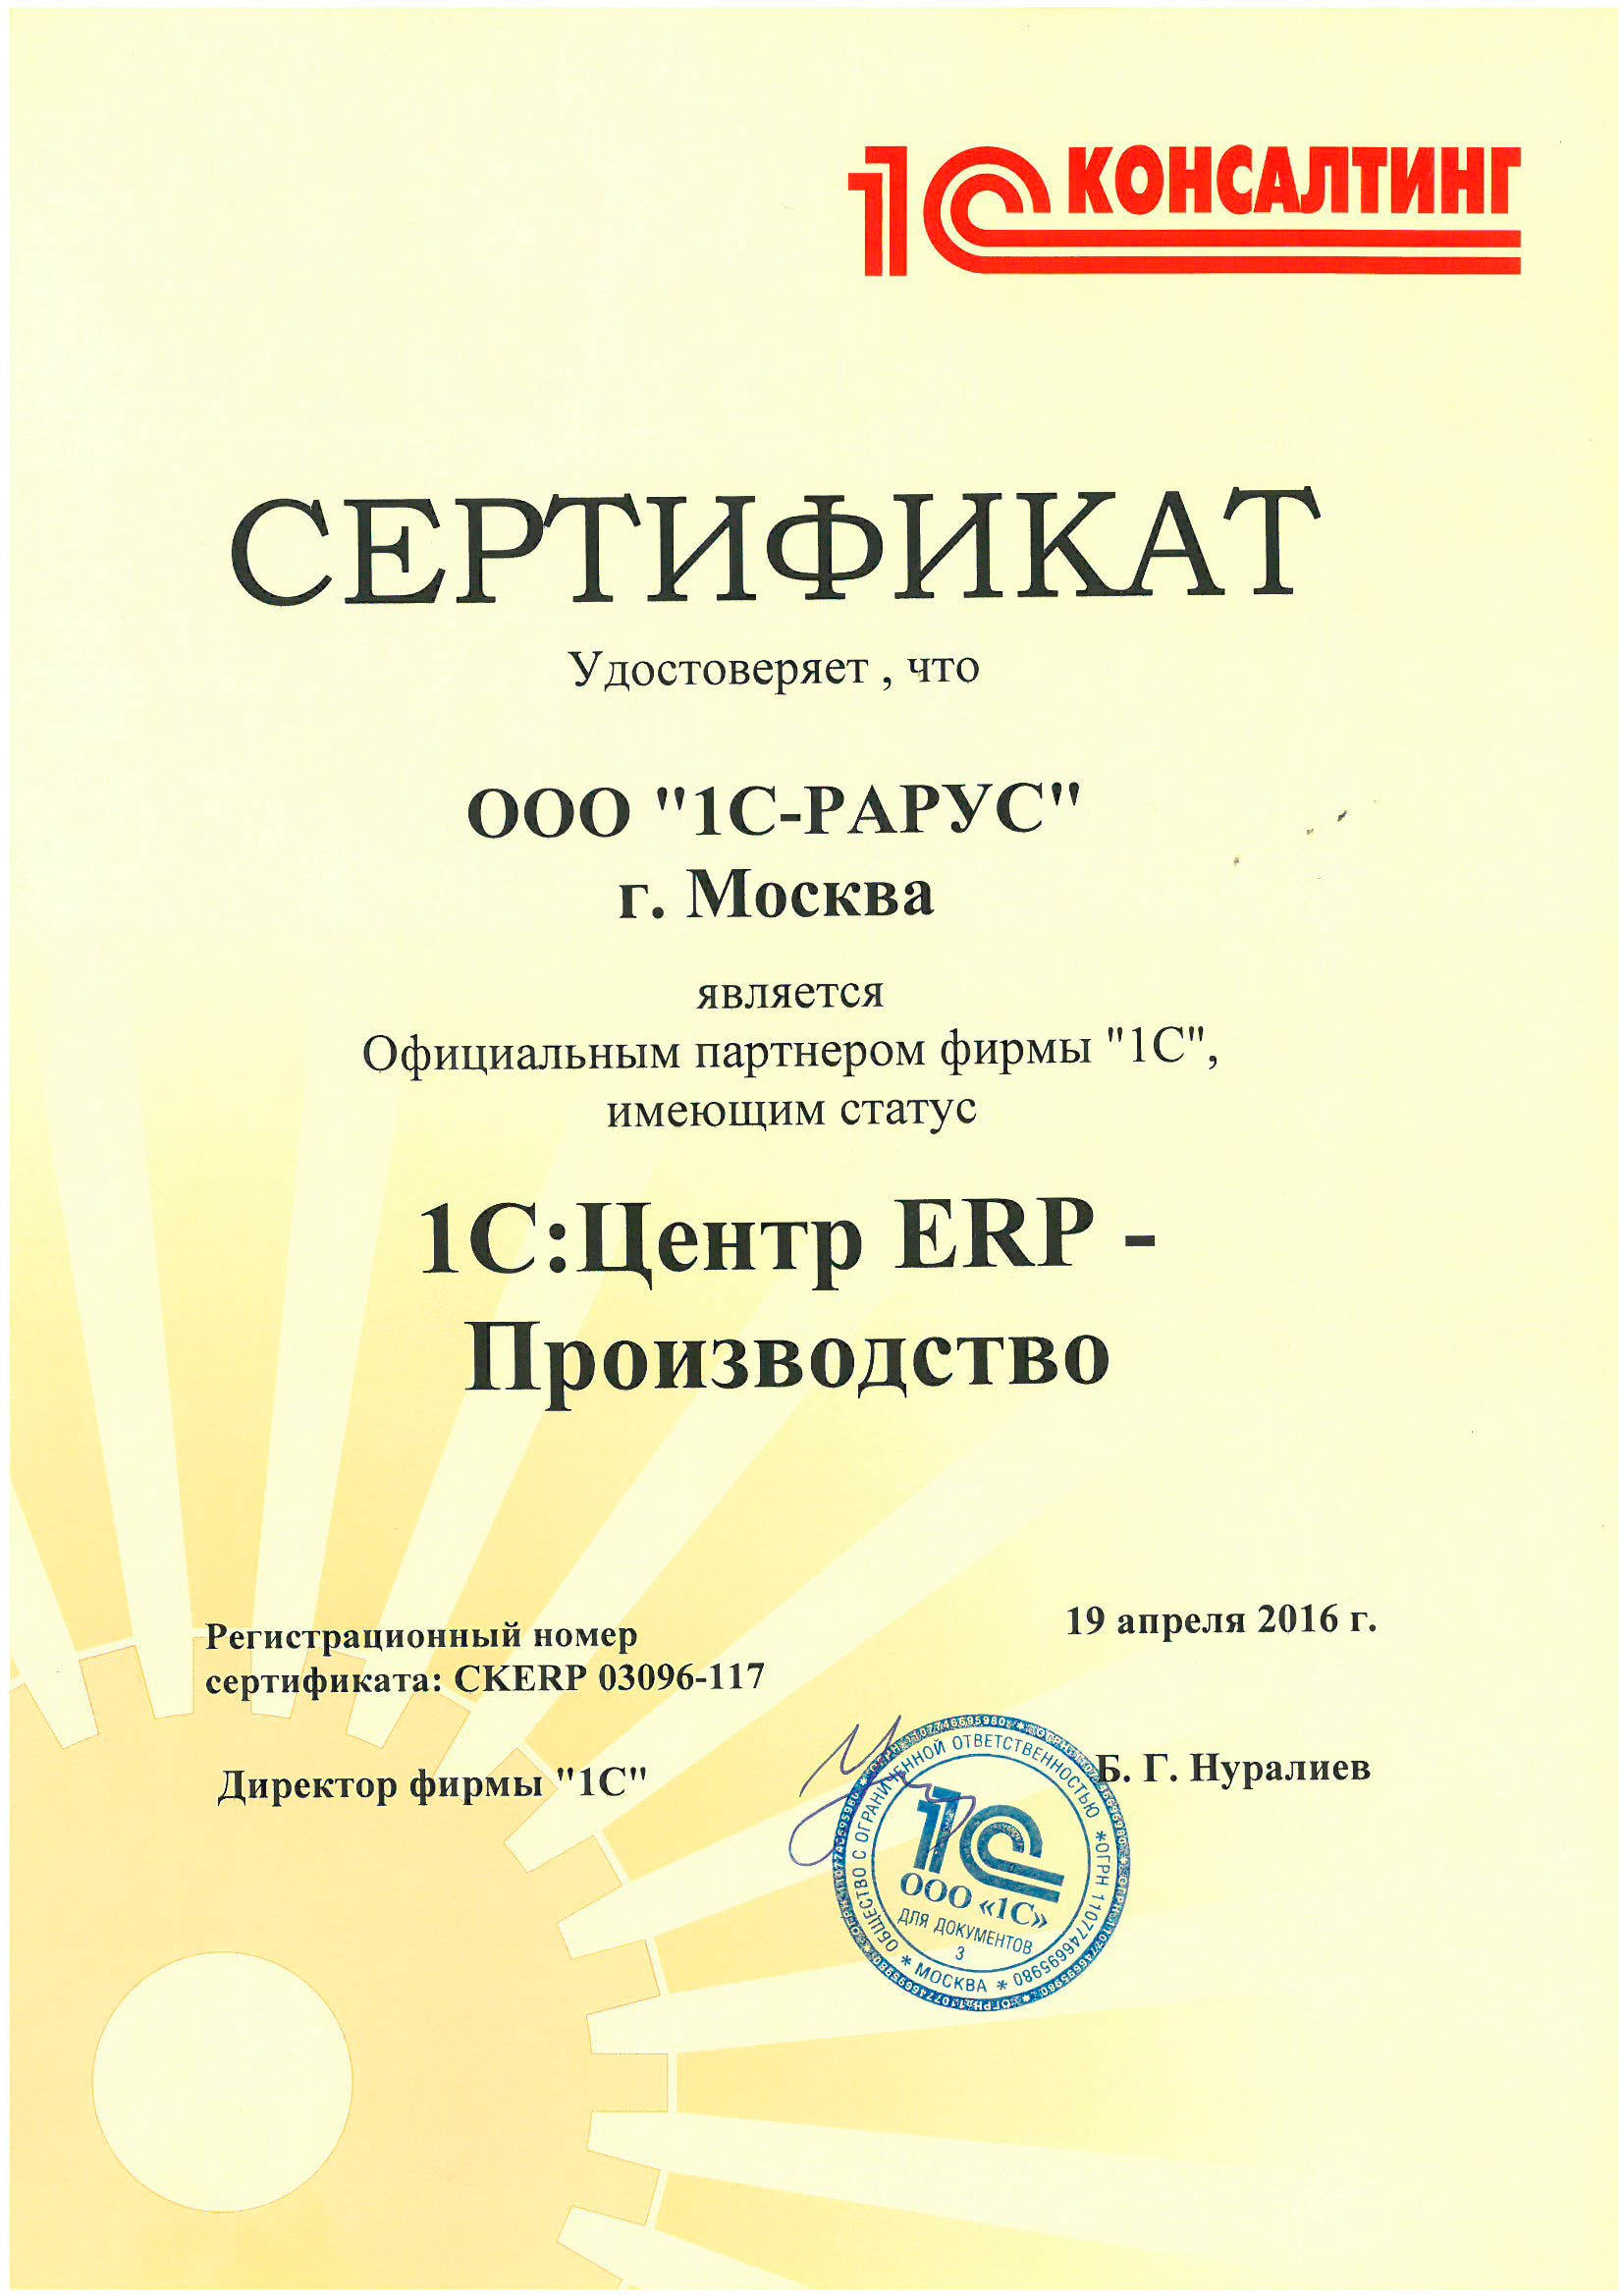 Сертификат «1С» «1С:Центр ERP — Производство»